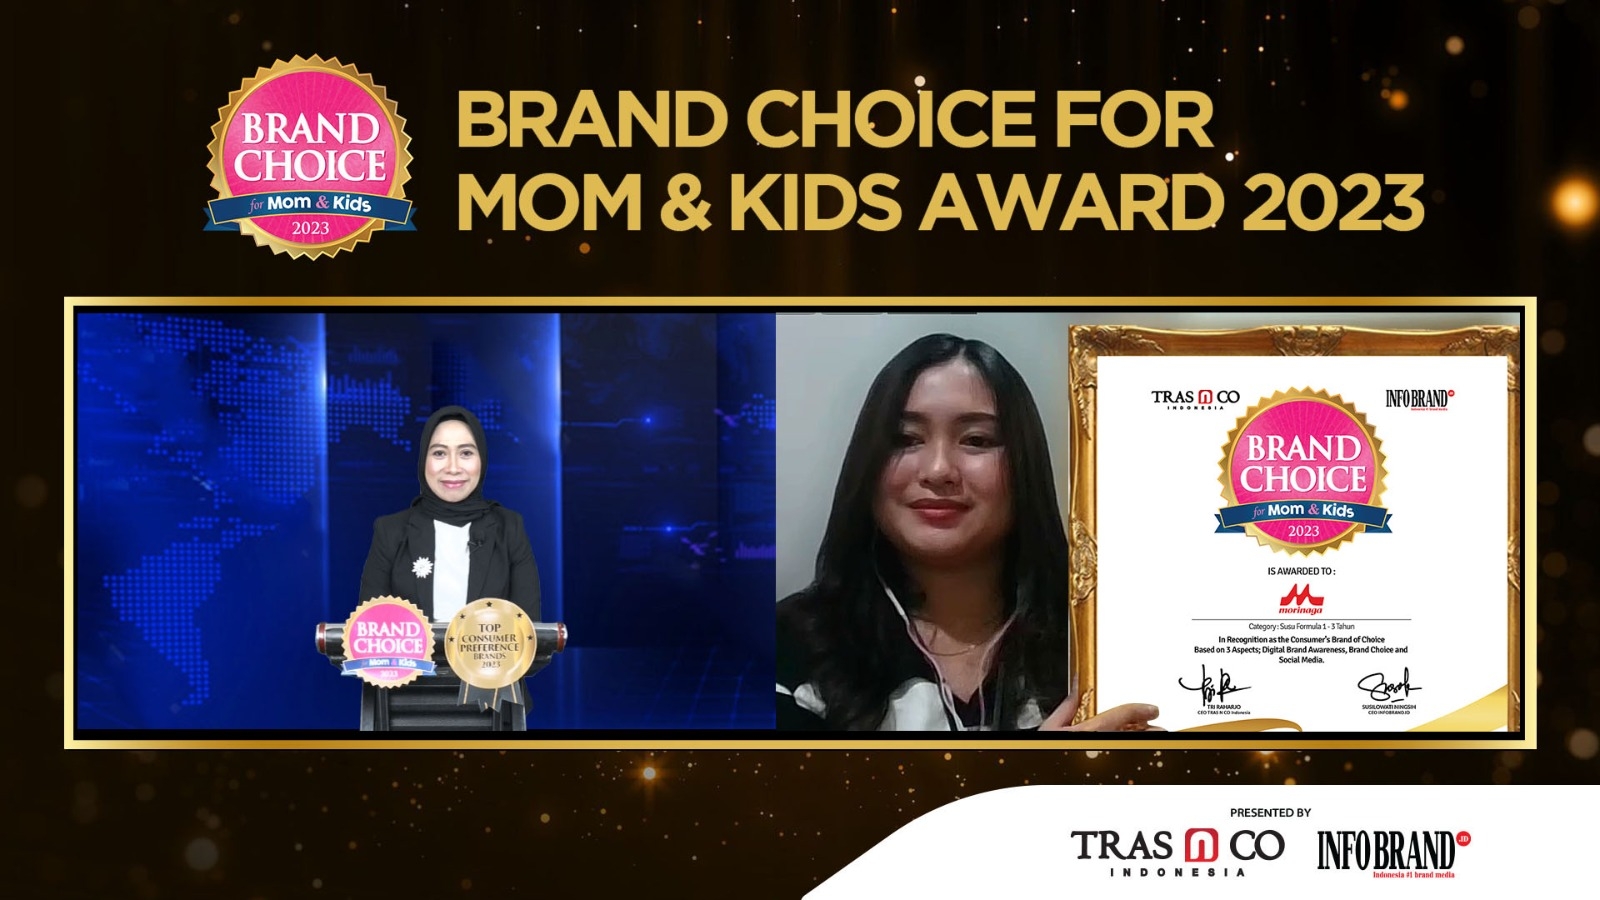 Dipercaya Para Bunda dalam Dampingi Tumbuh Kembang Anak, Morinaga Child Kid Sabet Brand Choice Award for Mom & Kids 2023